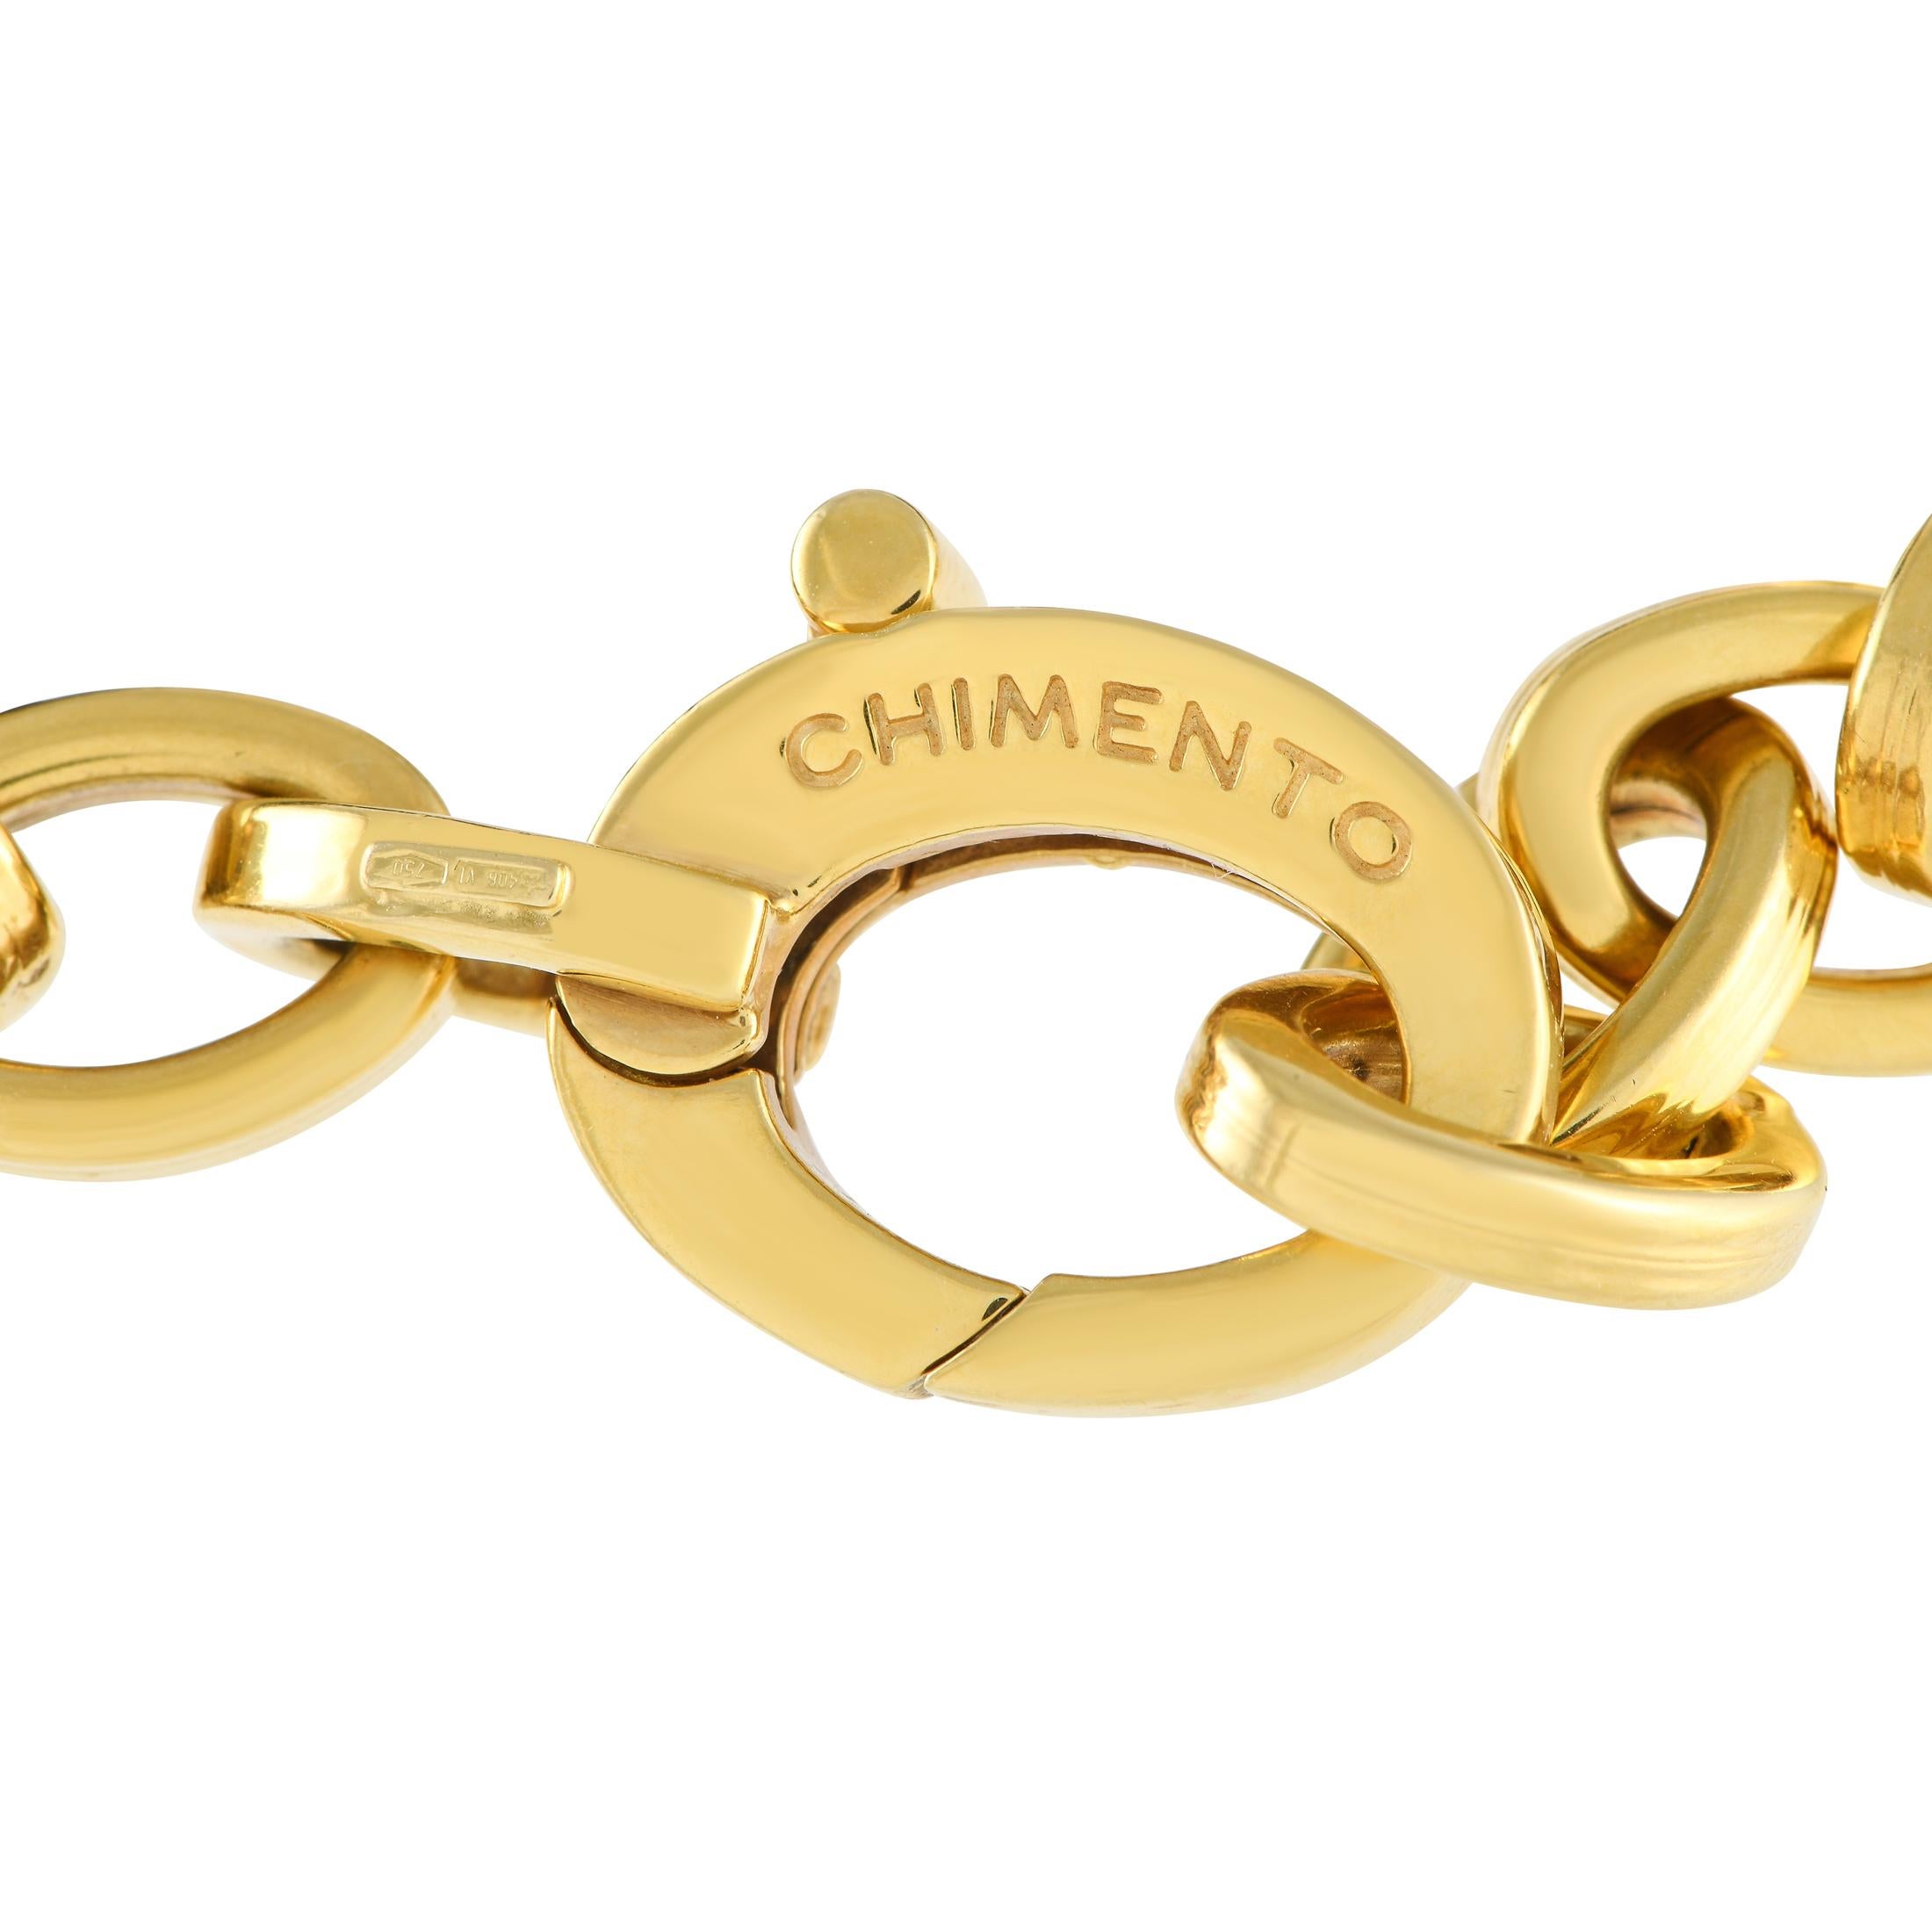 Mixed Cut Chimento 18K Yellow Gold Onyx Chain Link Bracelet